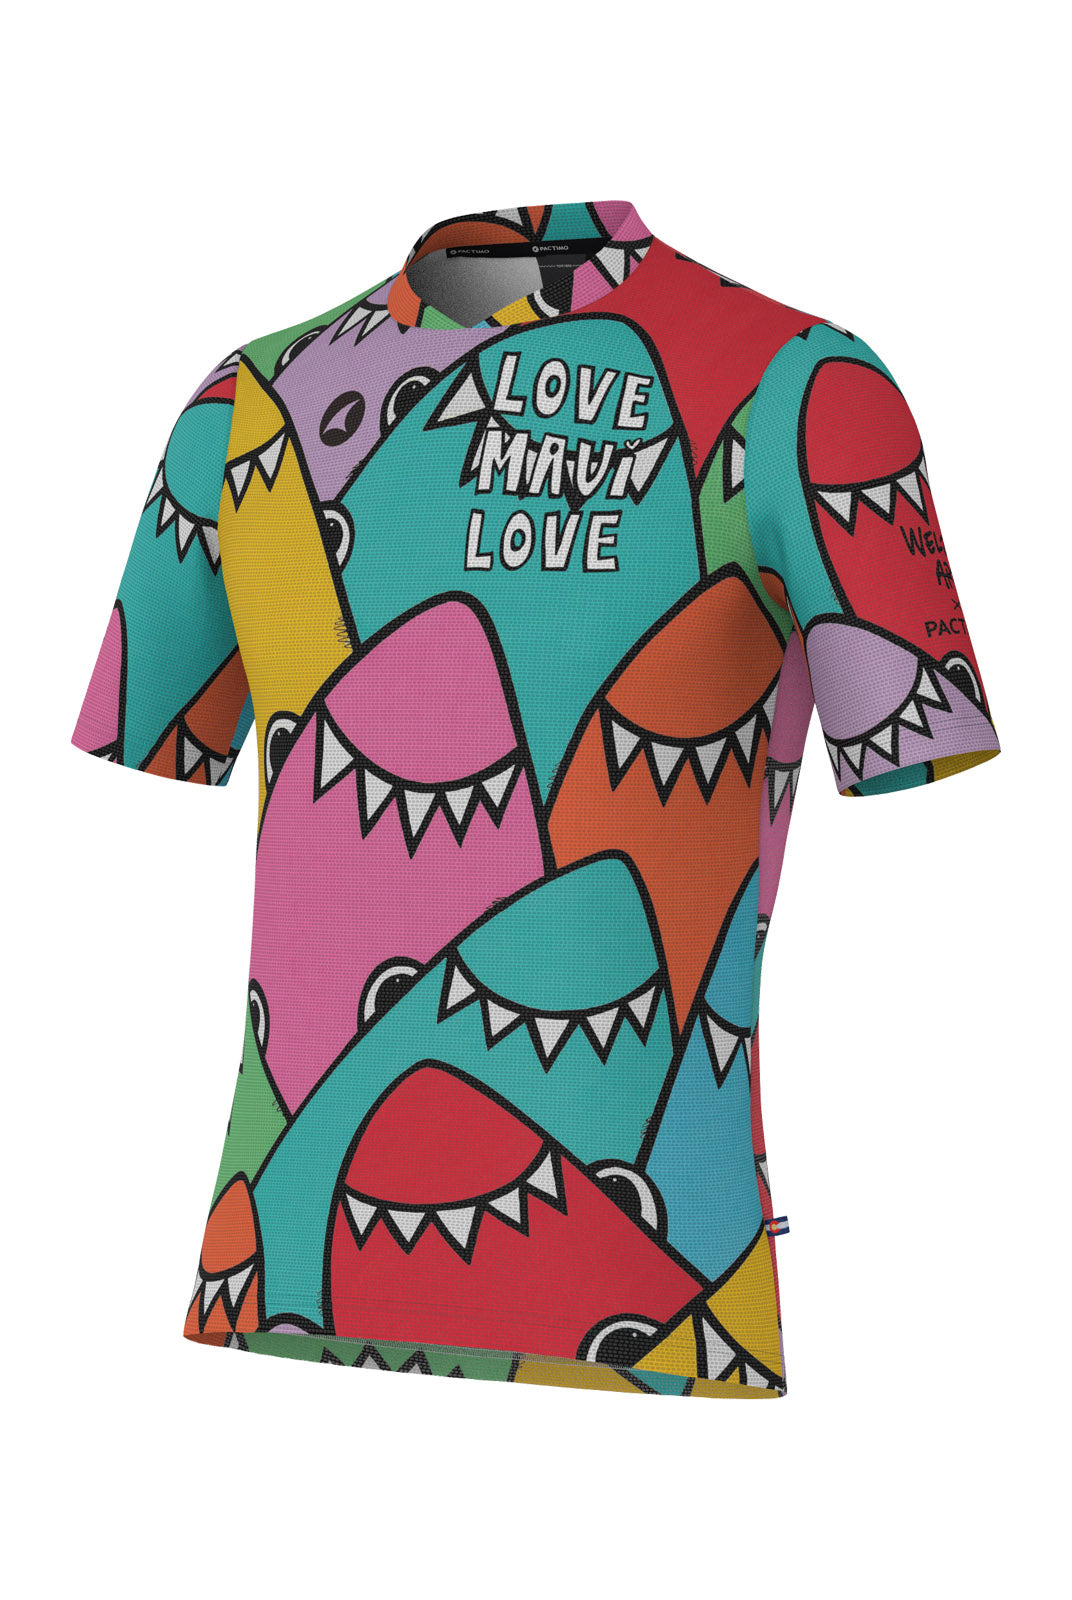 Men's Maui Relief Shirt - Rainbow Welzie Design - Front View